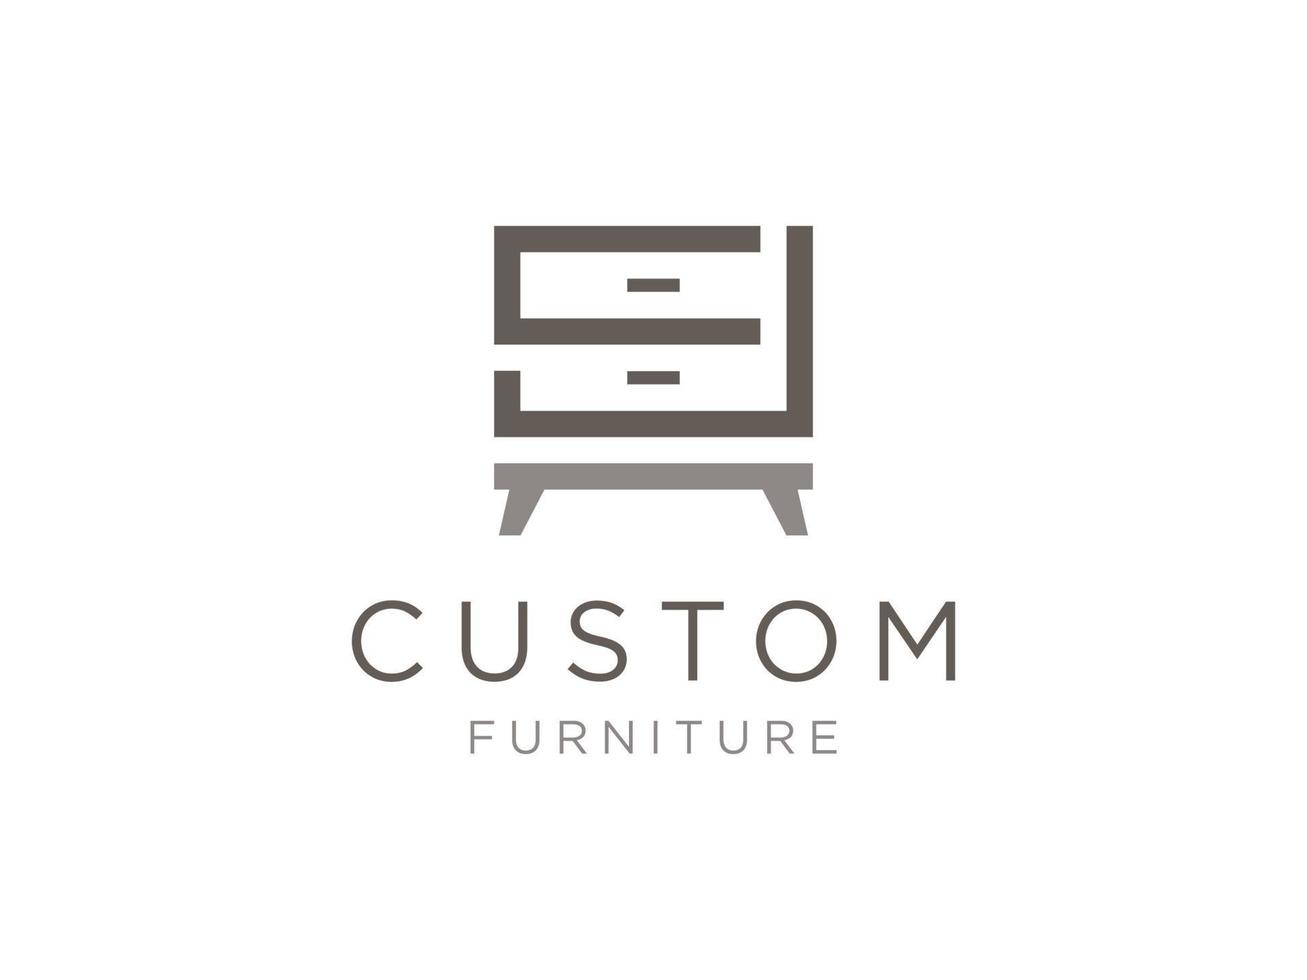 Letter J with wooden furniture concept logo design inspiration vector